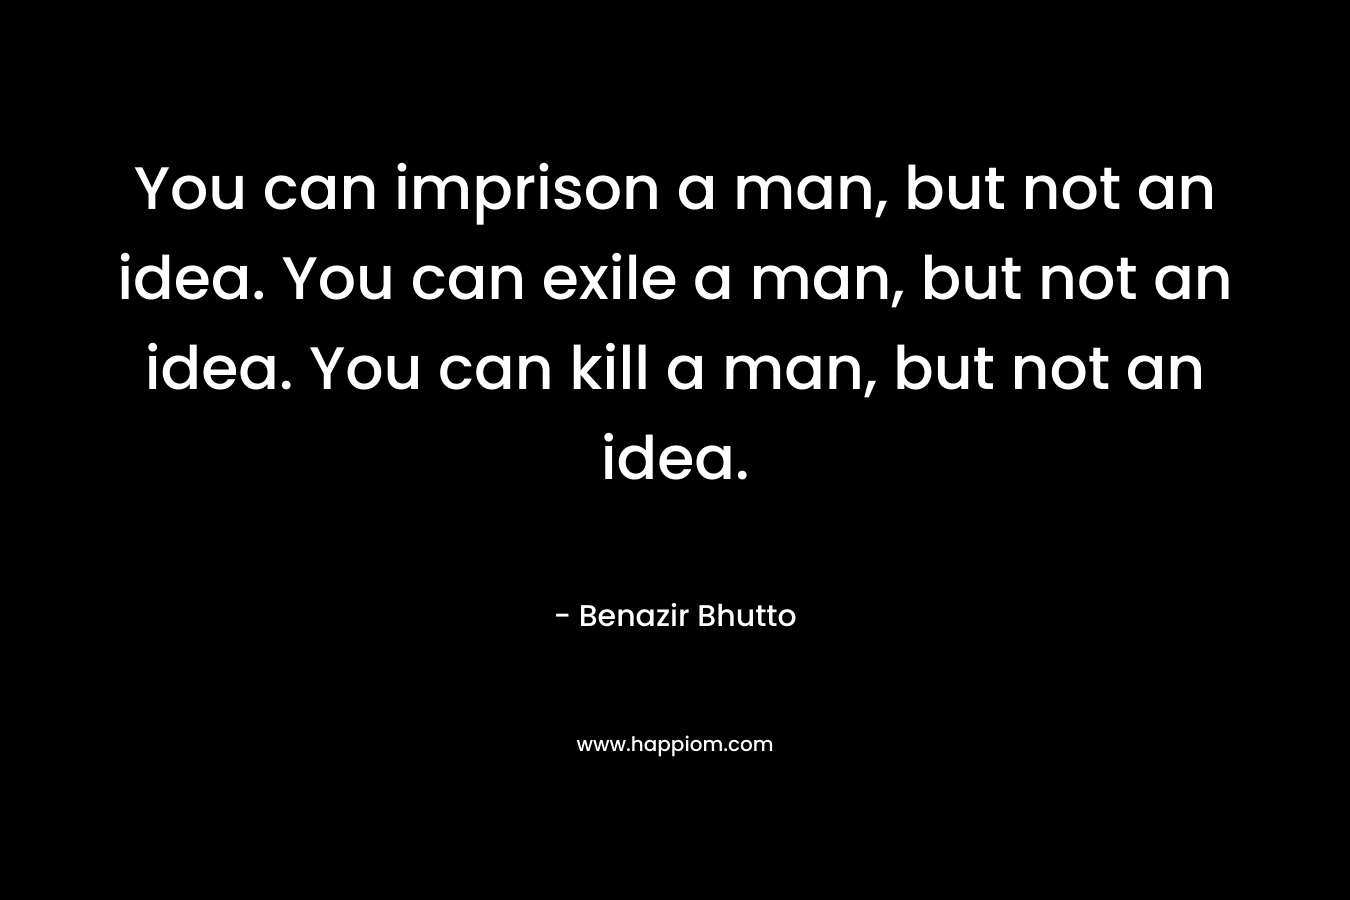 You can imprison a man, but not an idea. You can exile a man, but not an idea. You can kill a man, but not an idea. – Benazir Bhutto